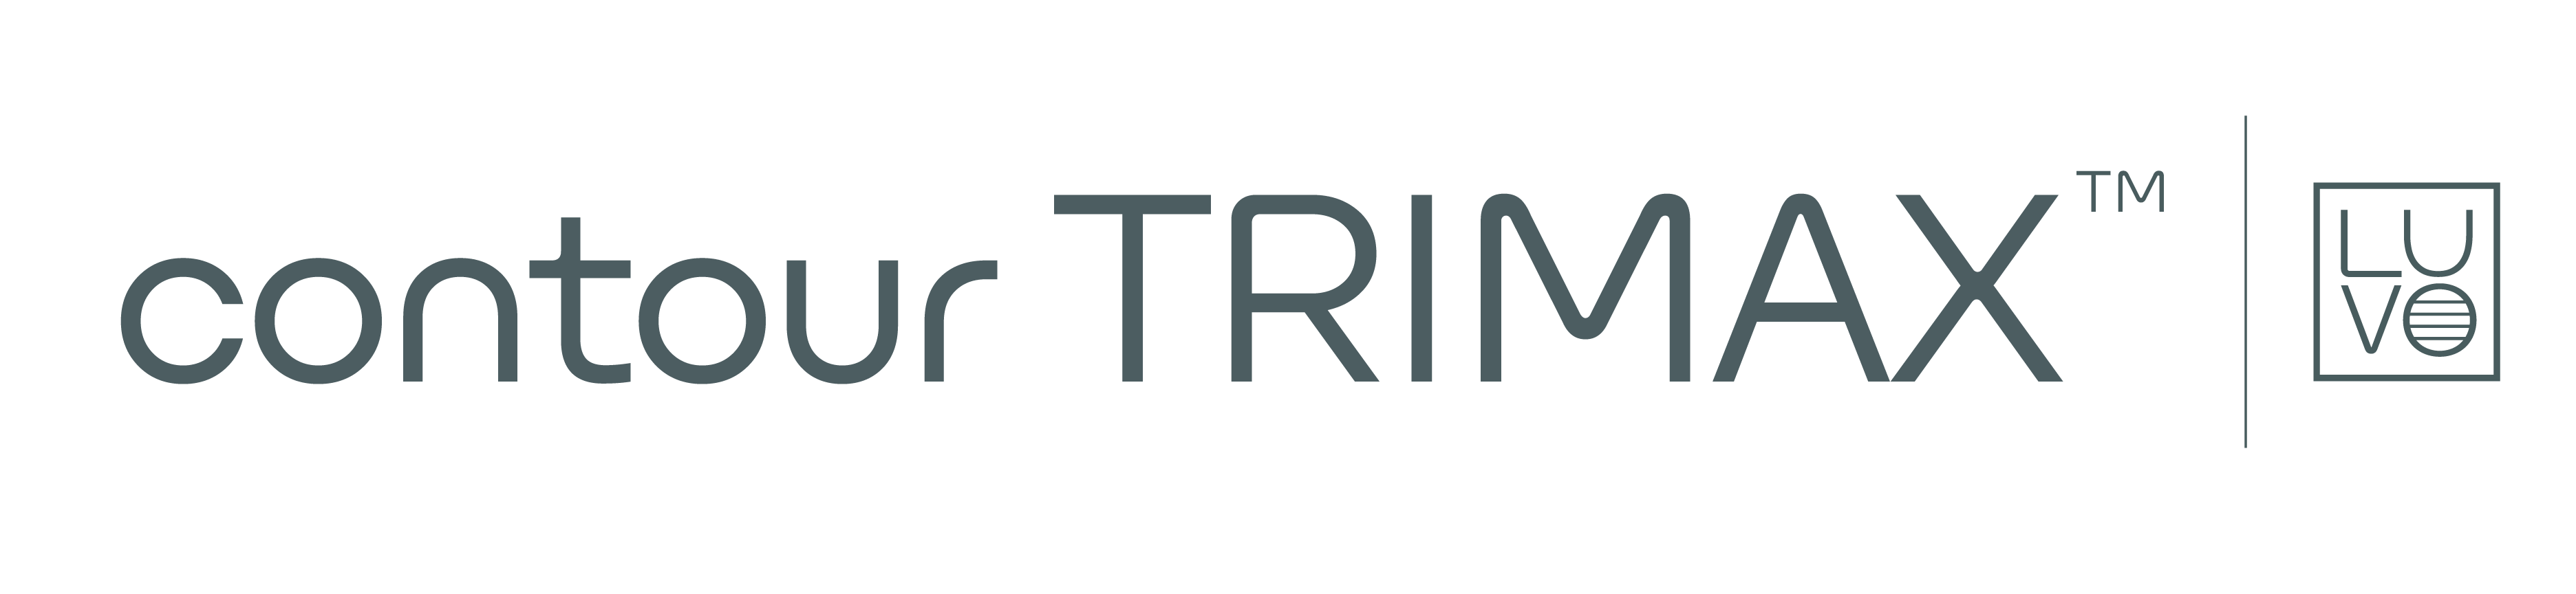 CONTOUR TRIMAX logo